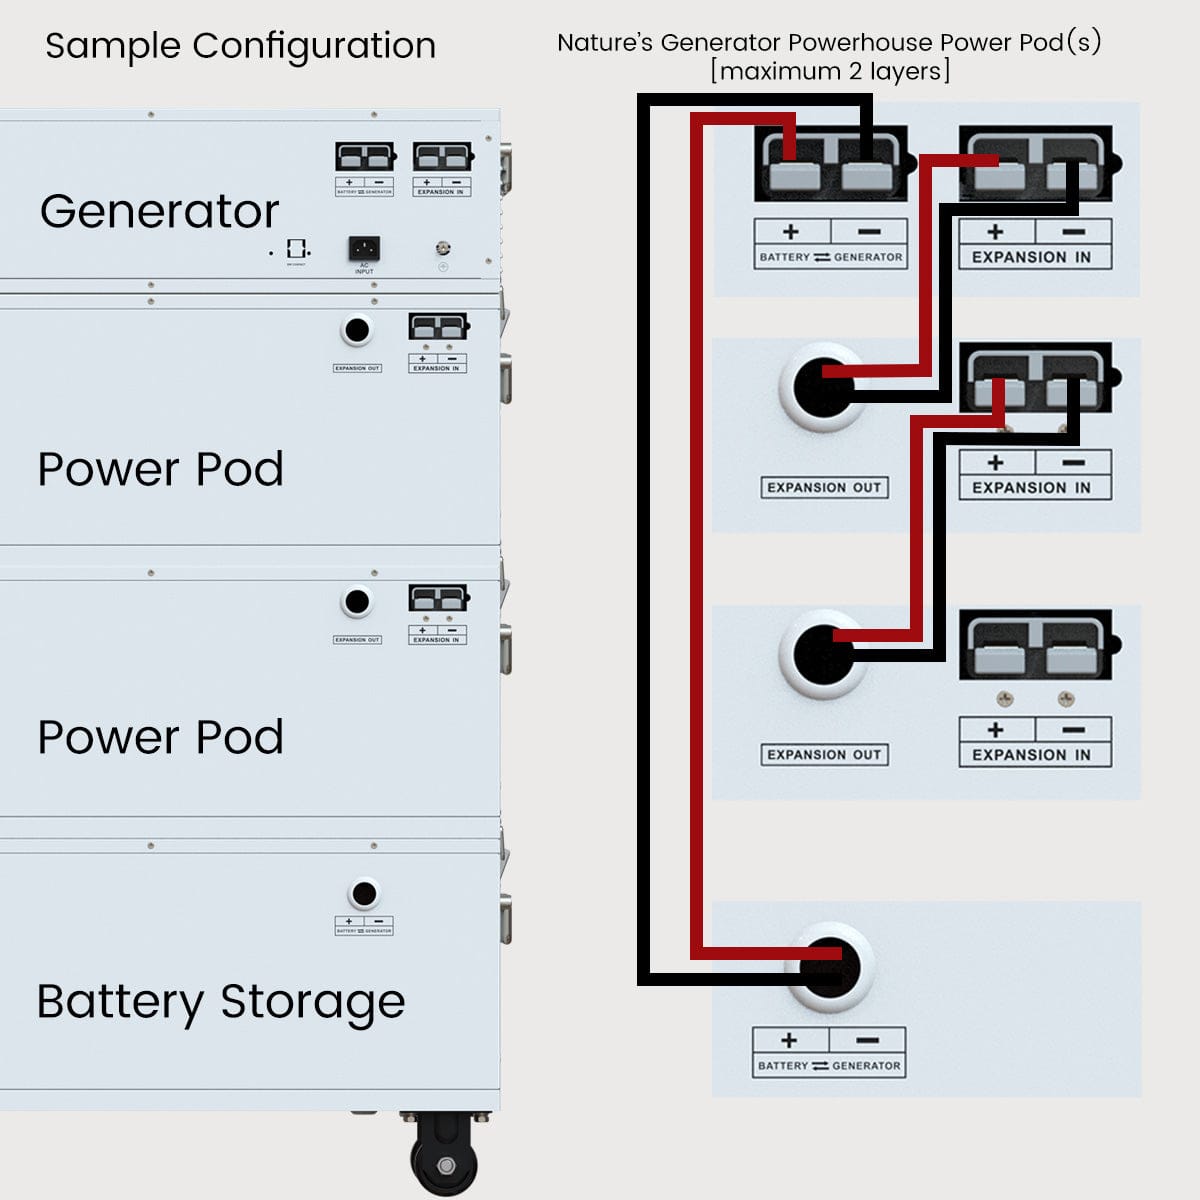 Nature’s Generator Powerhouse Power Addition - Nature's Generator